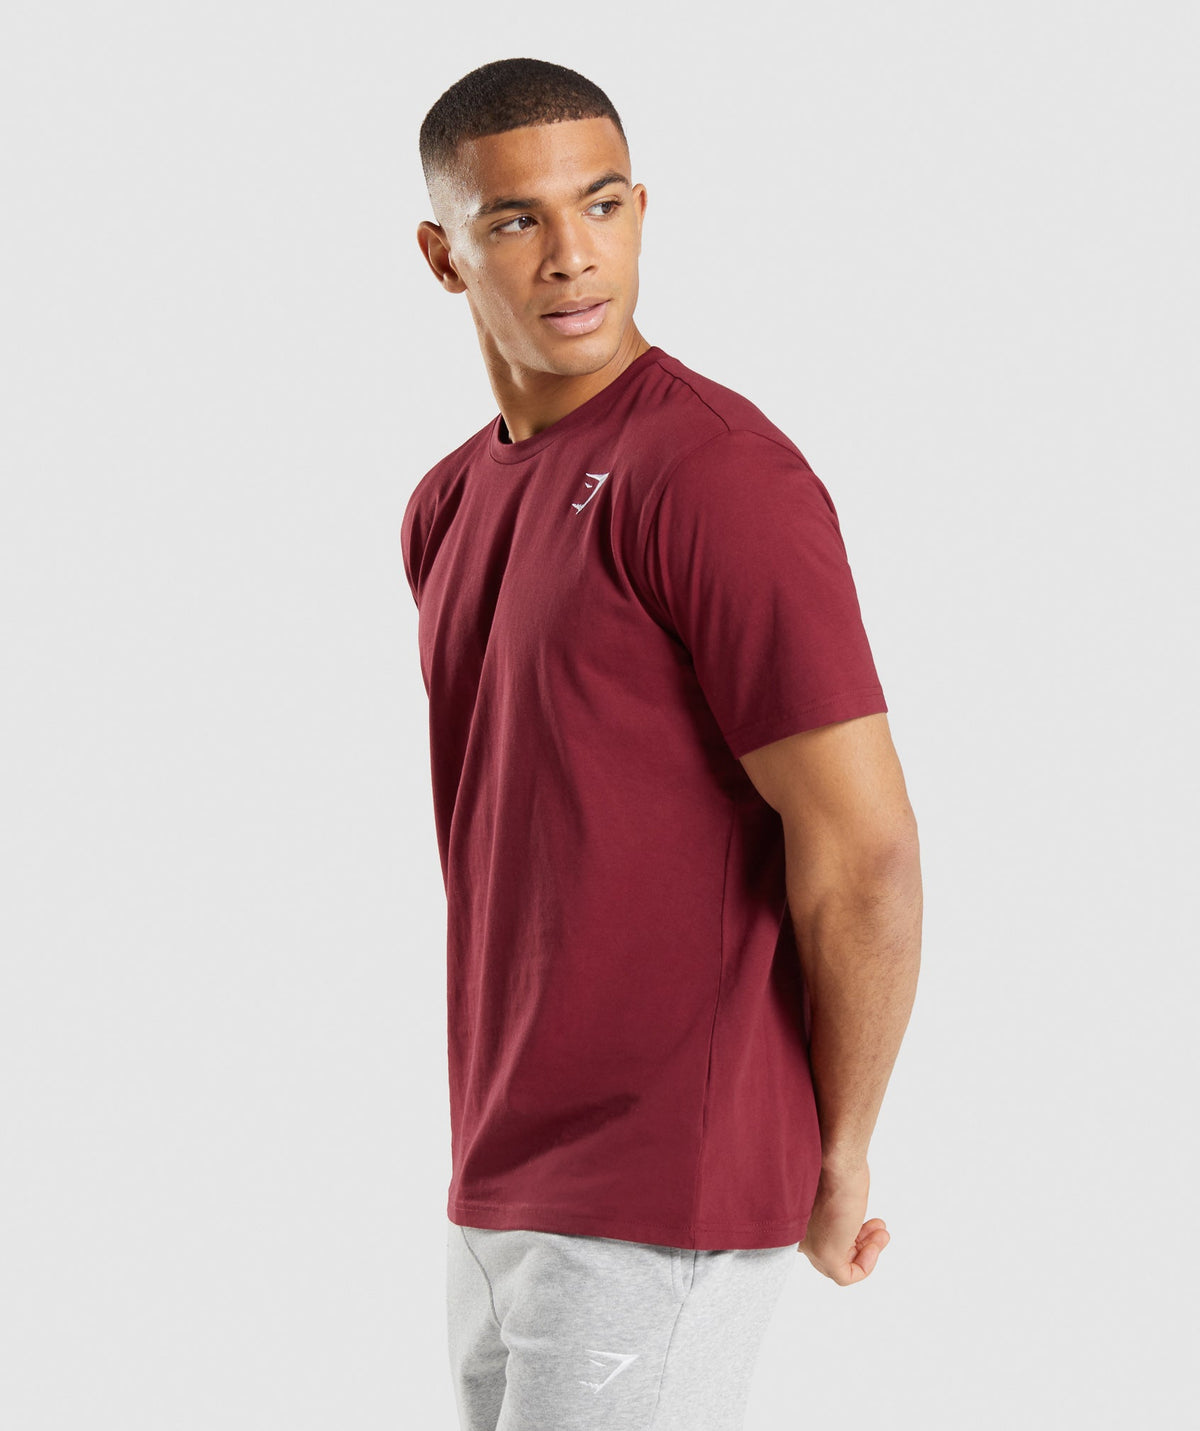 Gymshark Crest T-Shirt - Burgundy Red | Gymshark